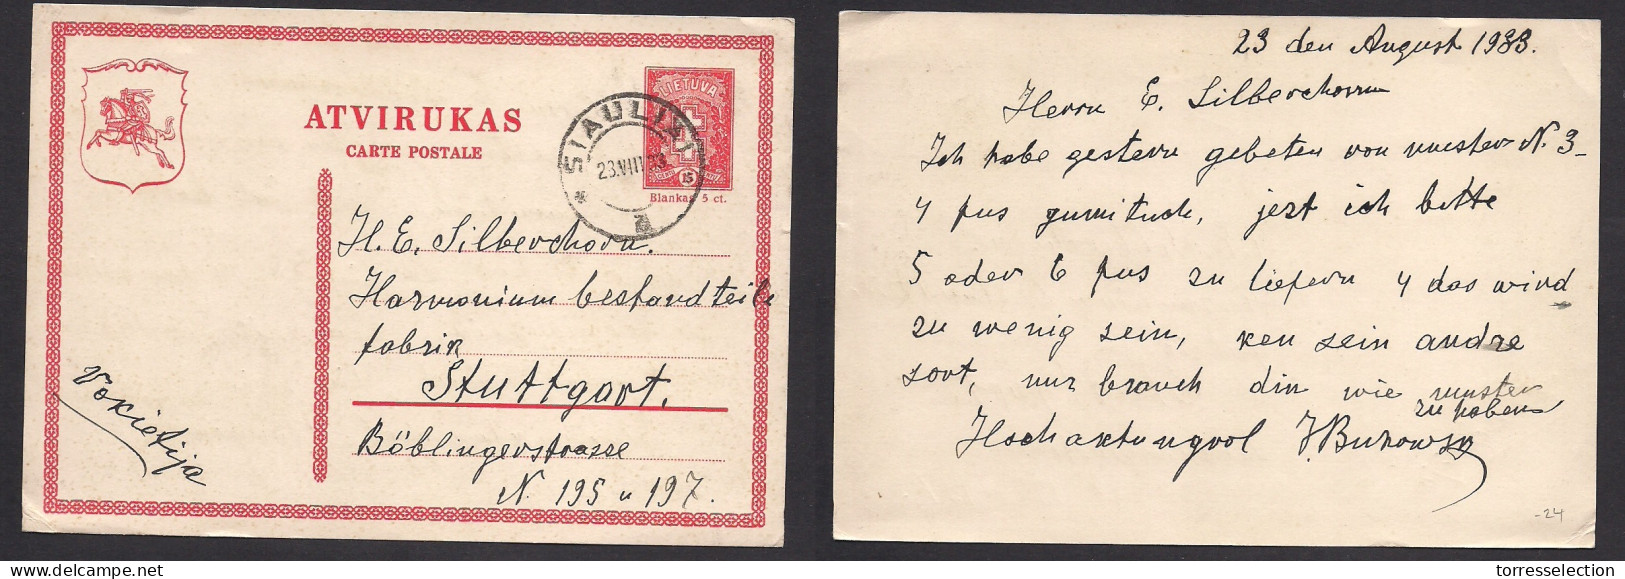 LITHUANIA. 1933 (28 Aug) Siauliai - Germany, Stuttgart. 5c Red Stat Card. Fine Used. XSALE. - Lituania